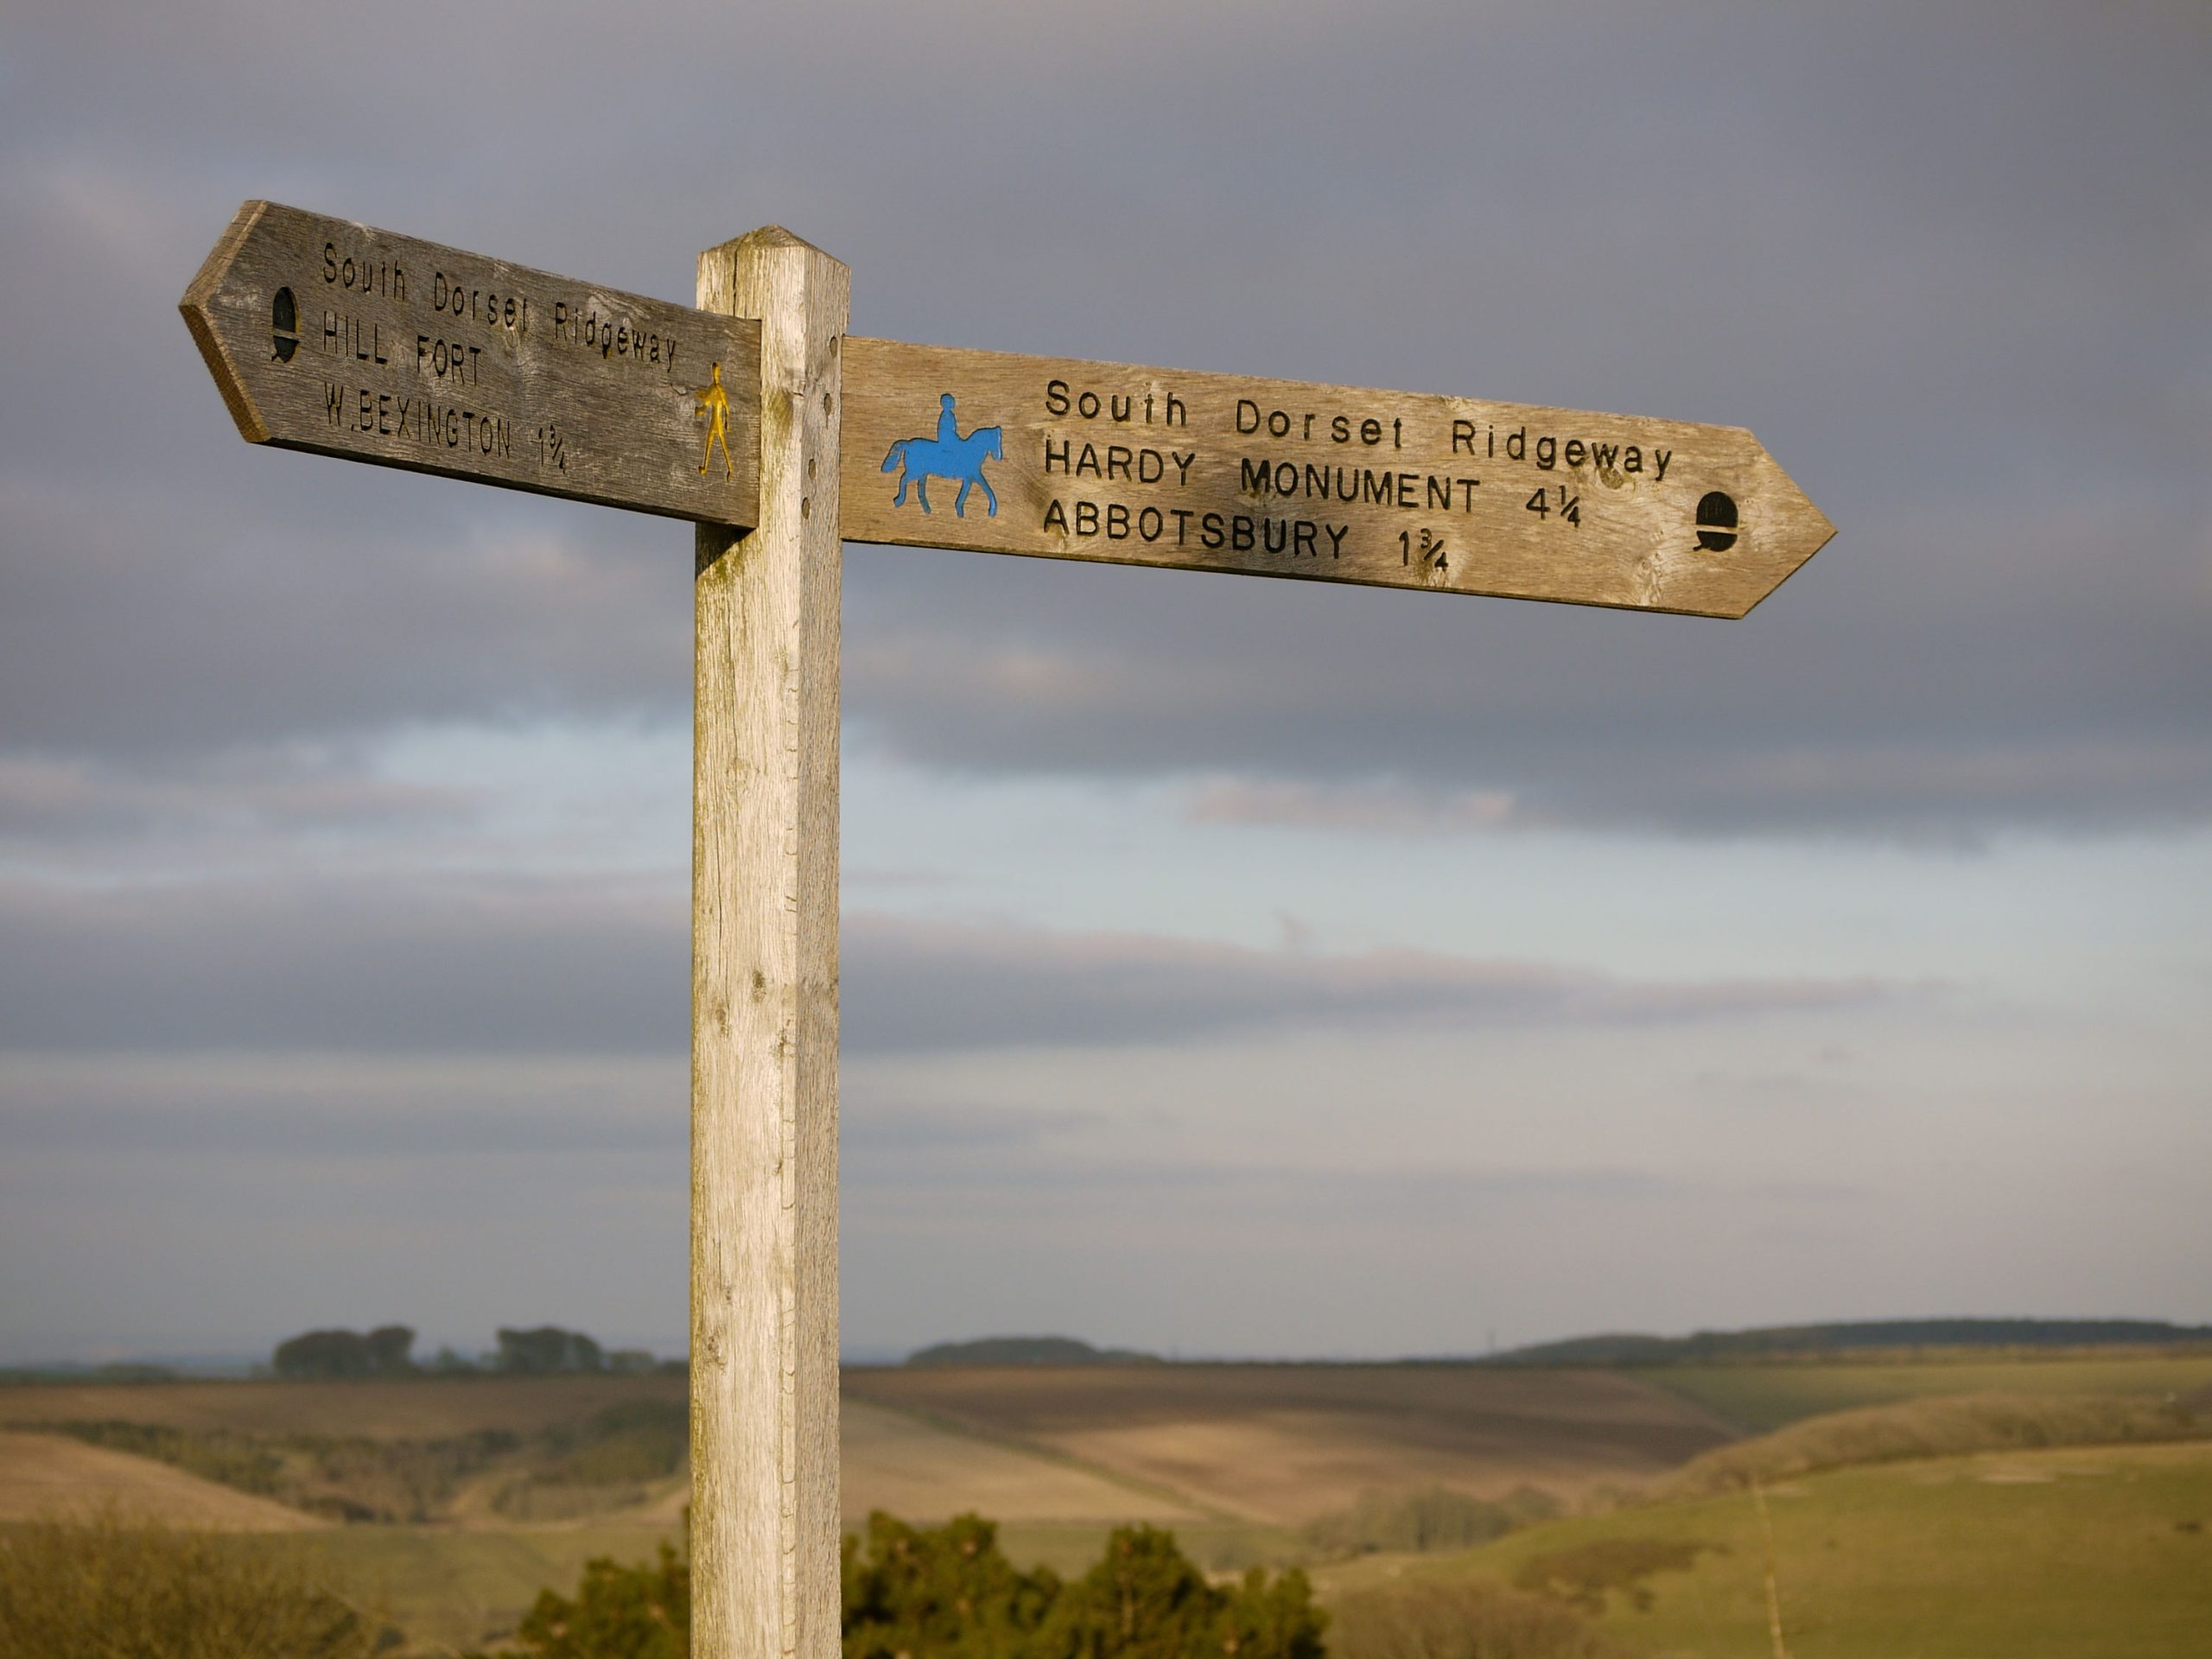 Wooden signpost South Dorset Ridgeway footpath Abbotsbury Hill, Dorse